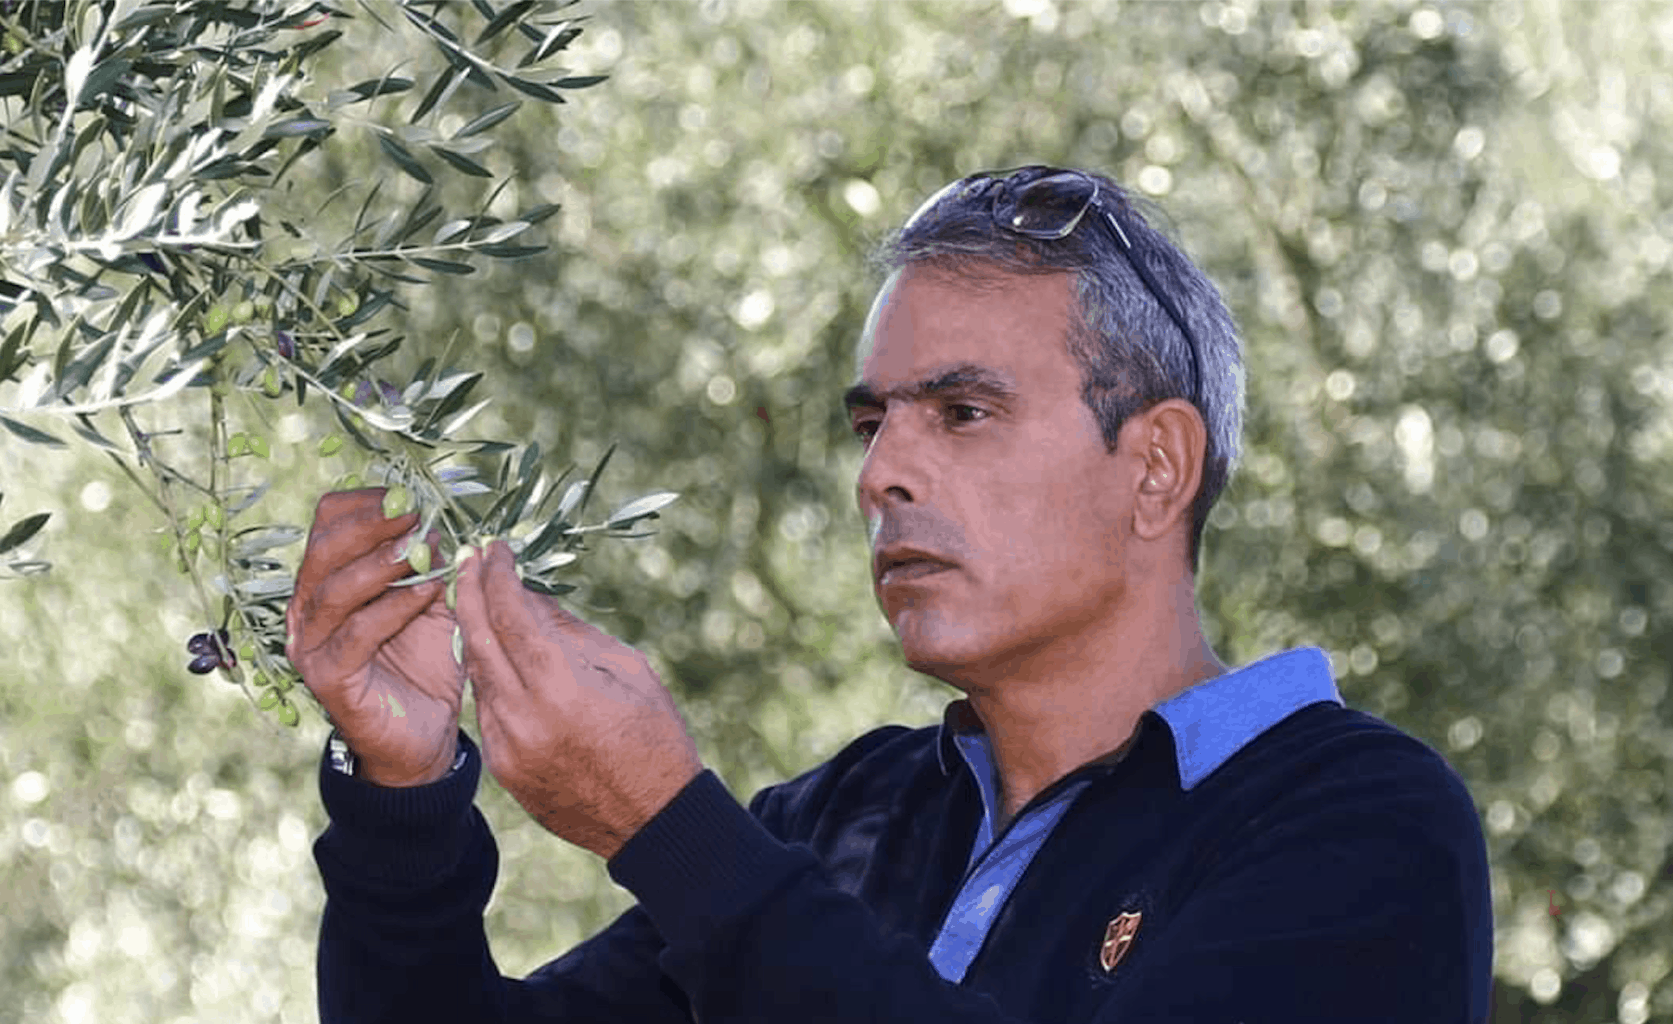 Sakellaropoulos Organic Farms sets world record, winning 203 international awards